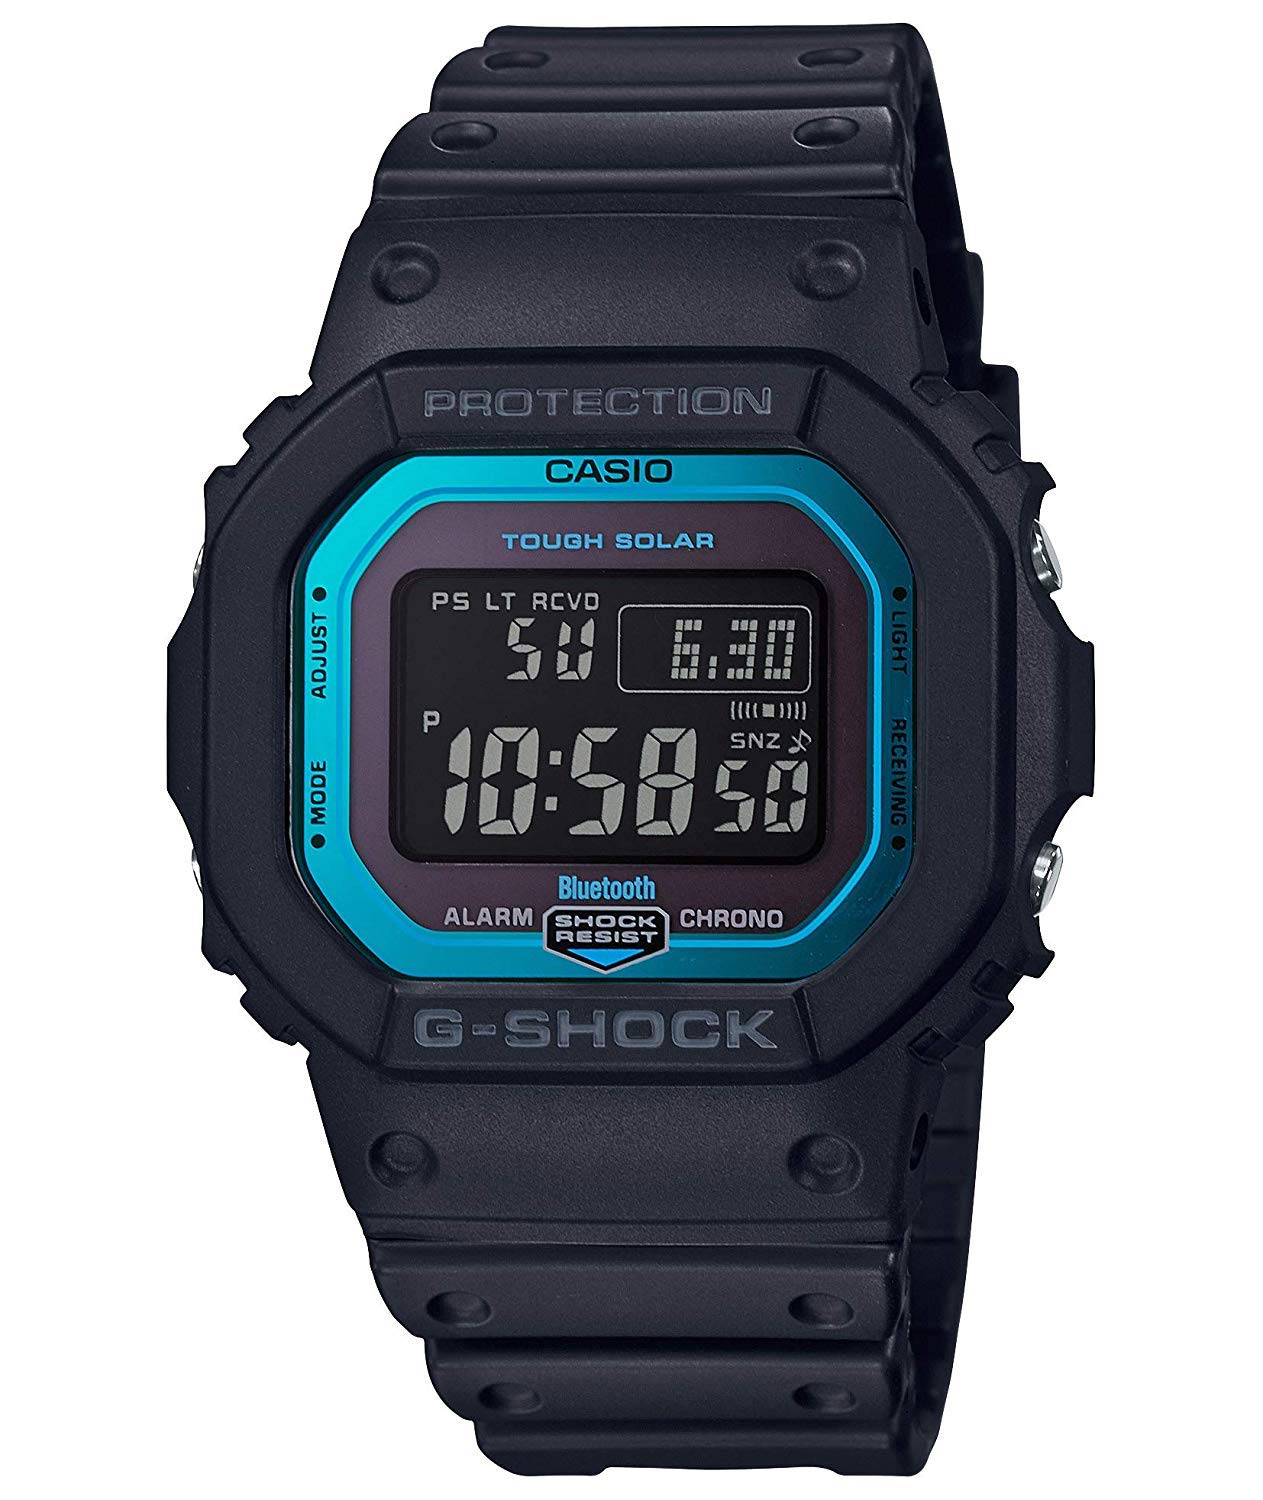 Casio G-Shock Men's Watch 5600 Series [Parallel Import], black and light blue, Belt Type: